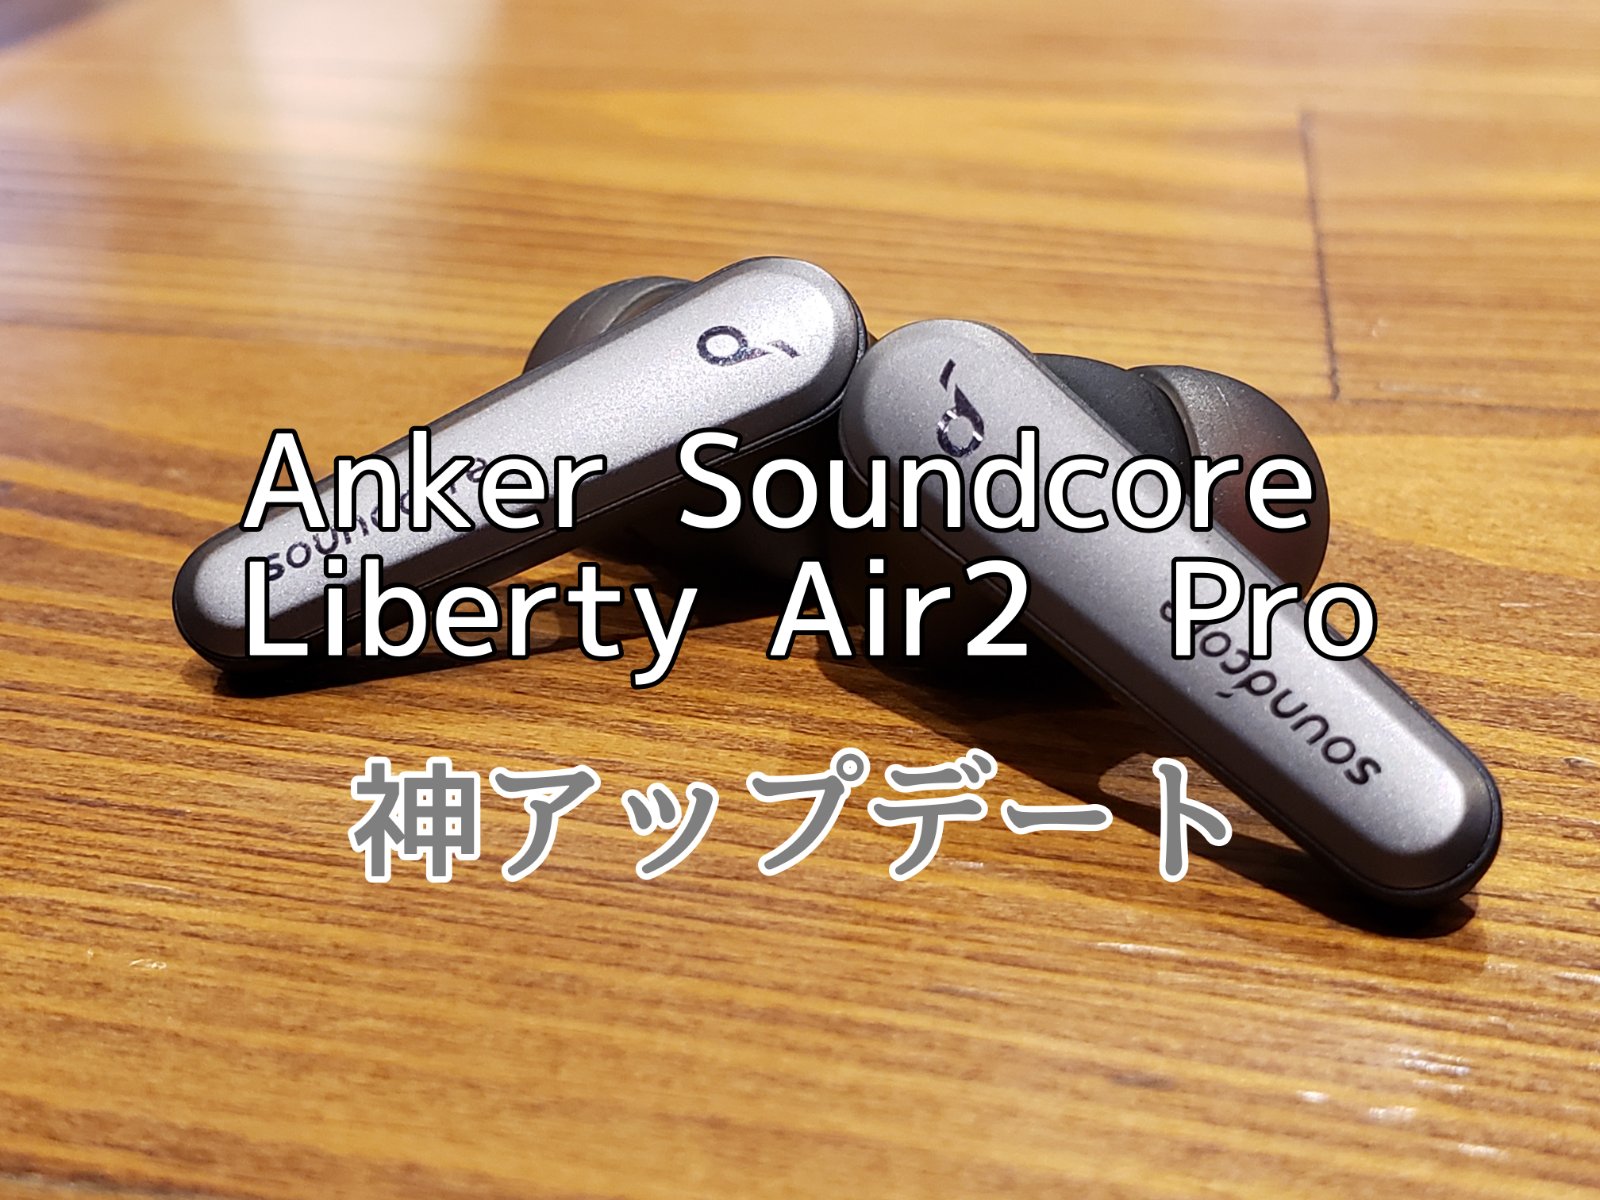 Anker Soundcore Liberty Air 2 Proアイキャッチ